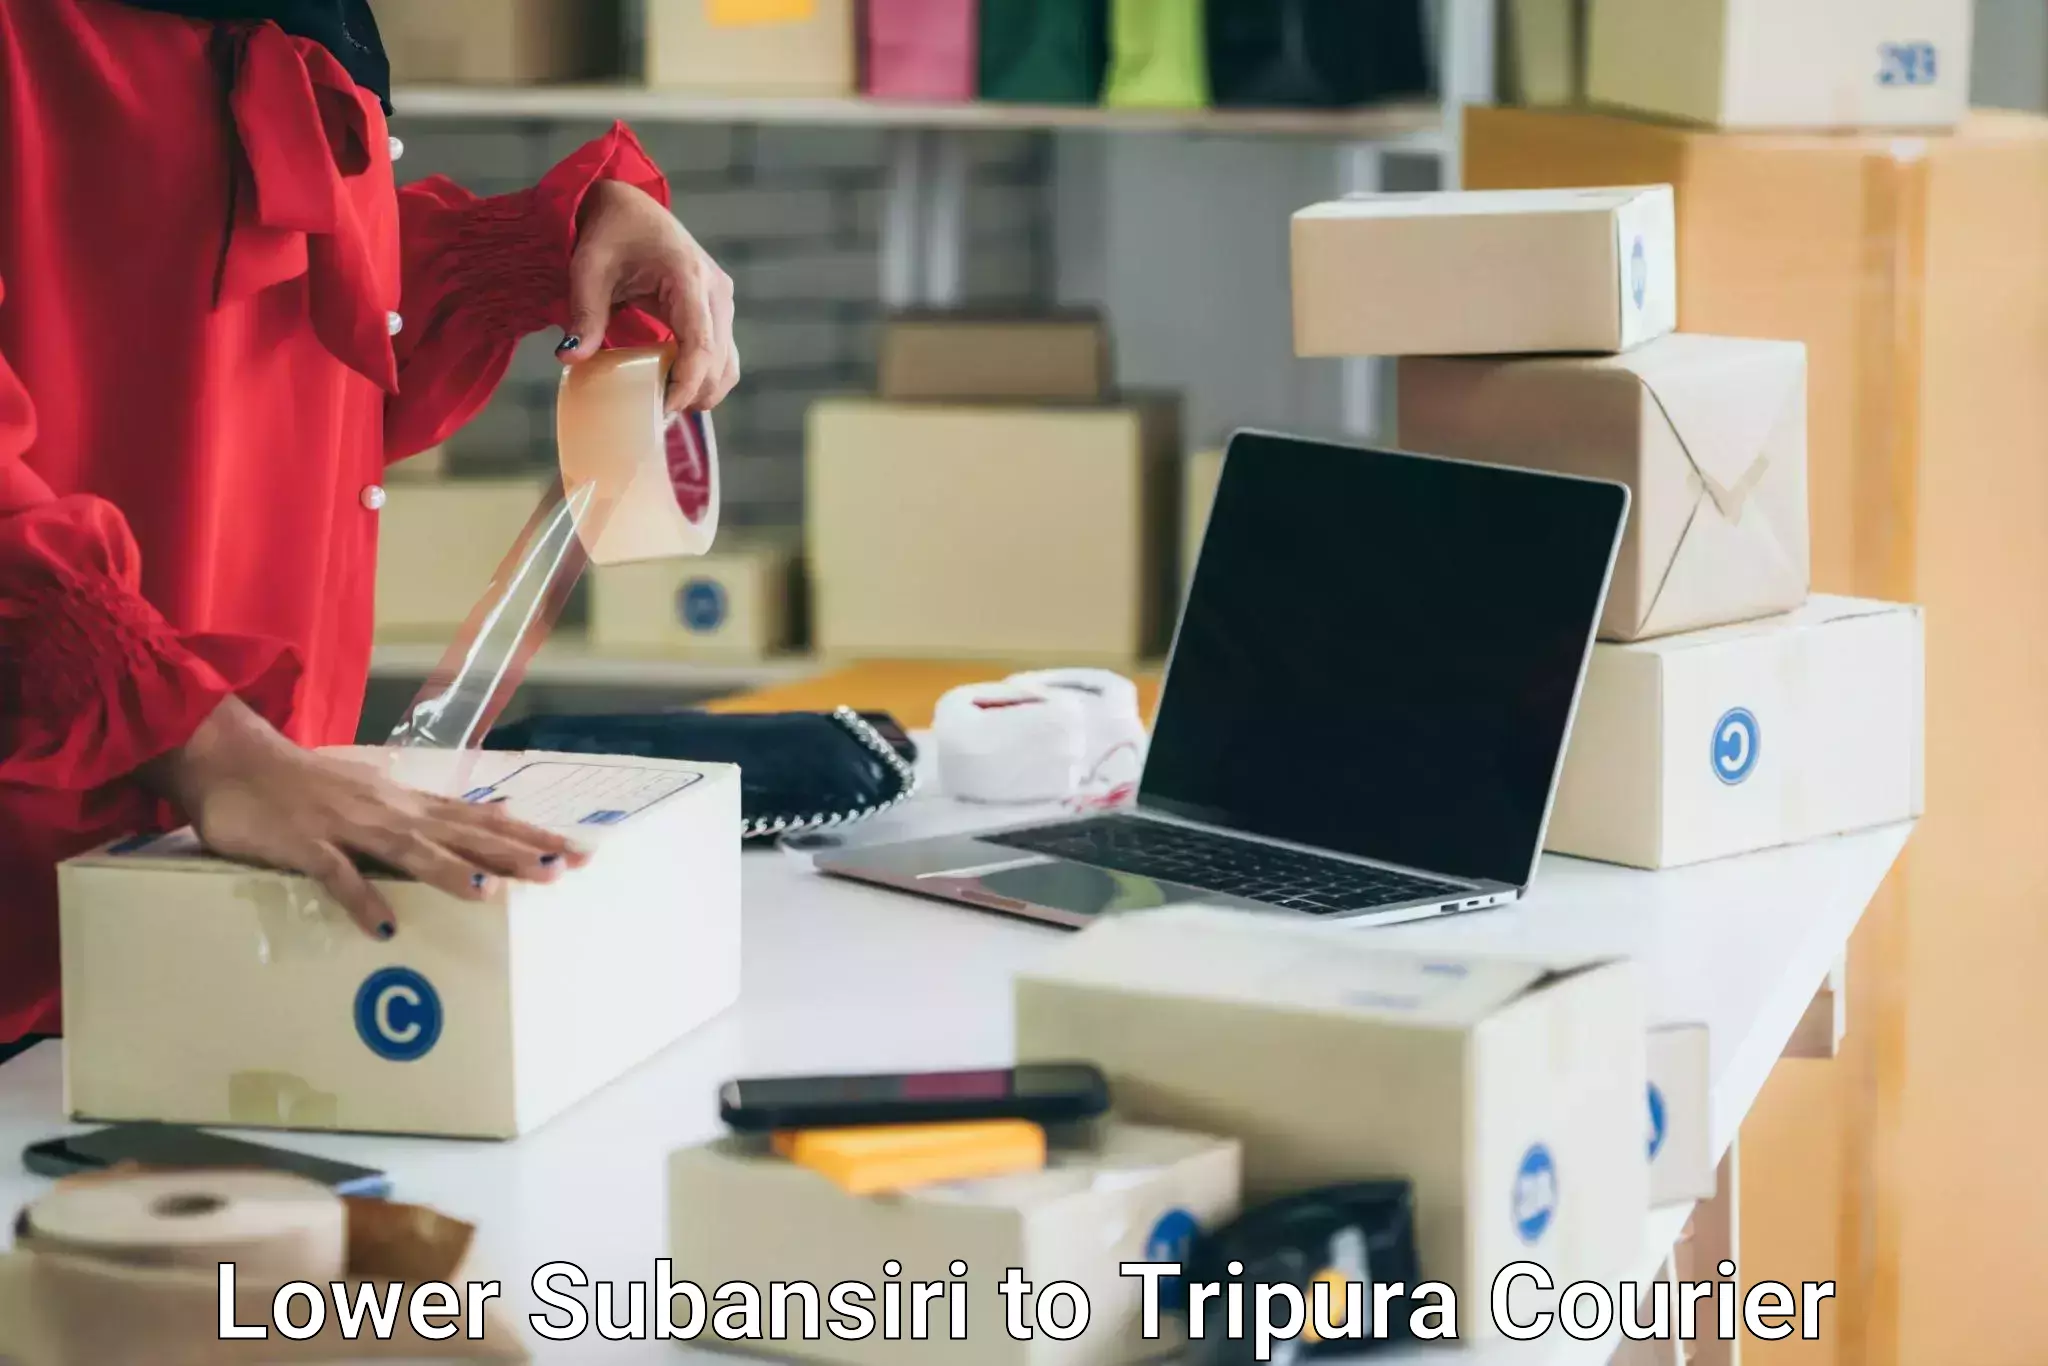 Professional moving company Lower Subansiri to Udaipur Tripura